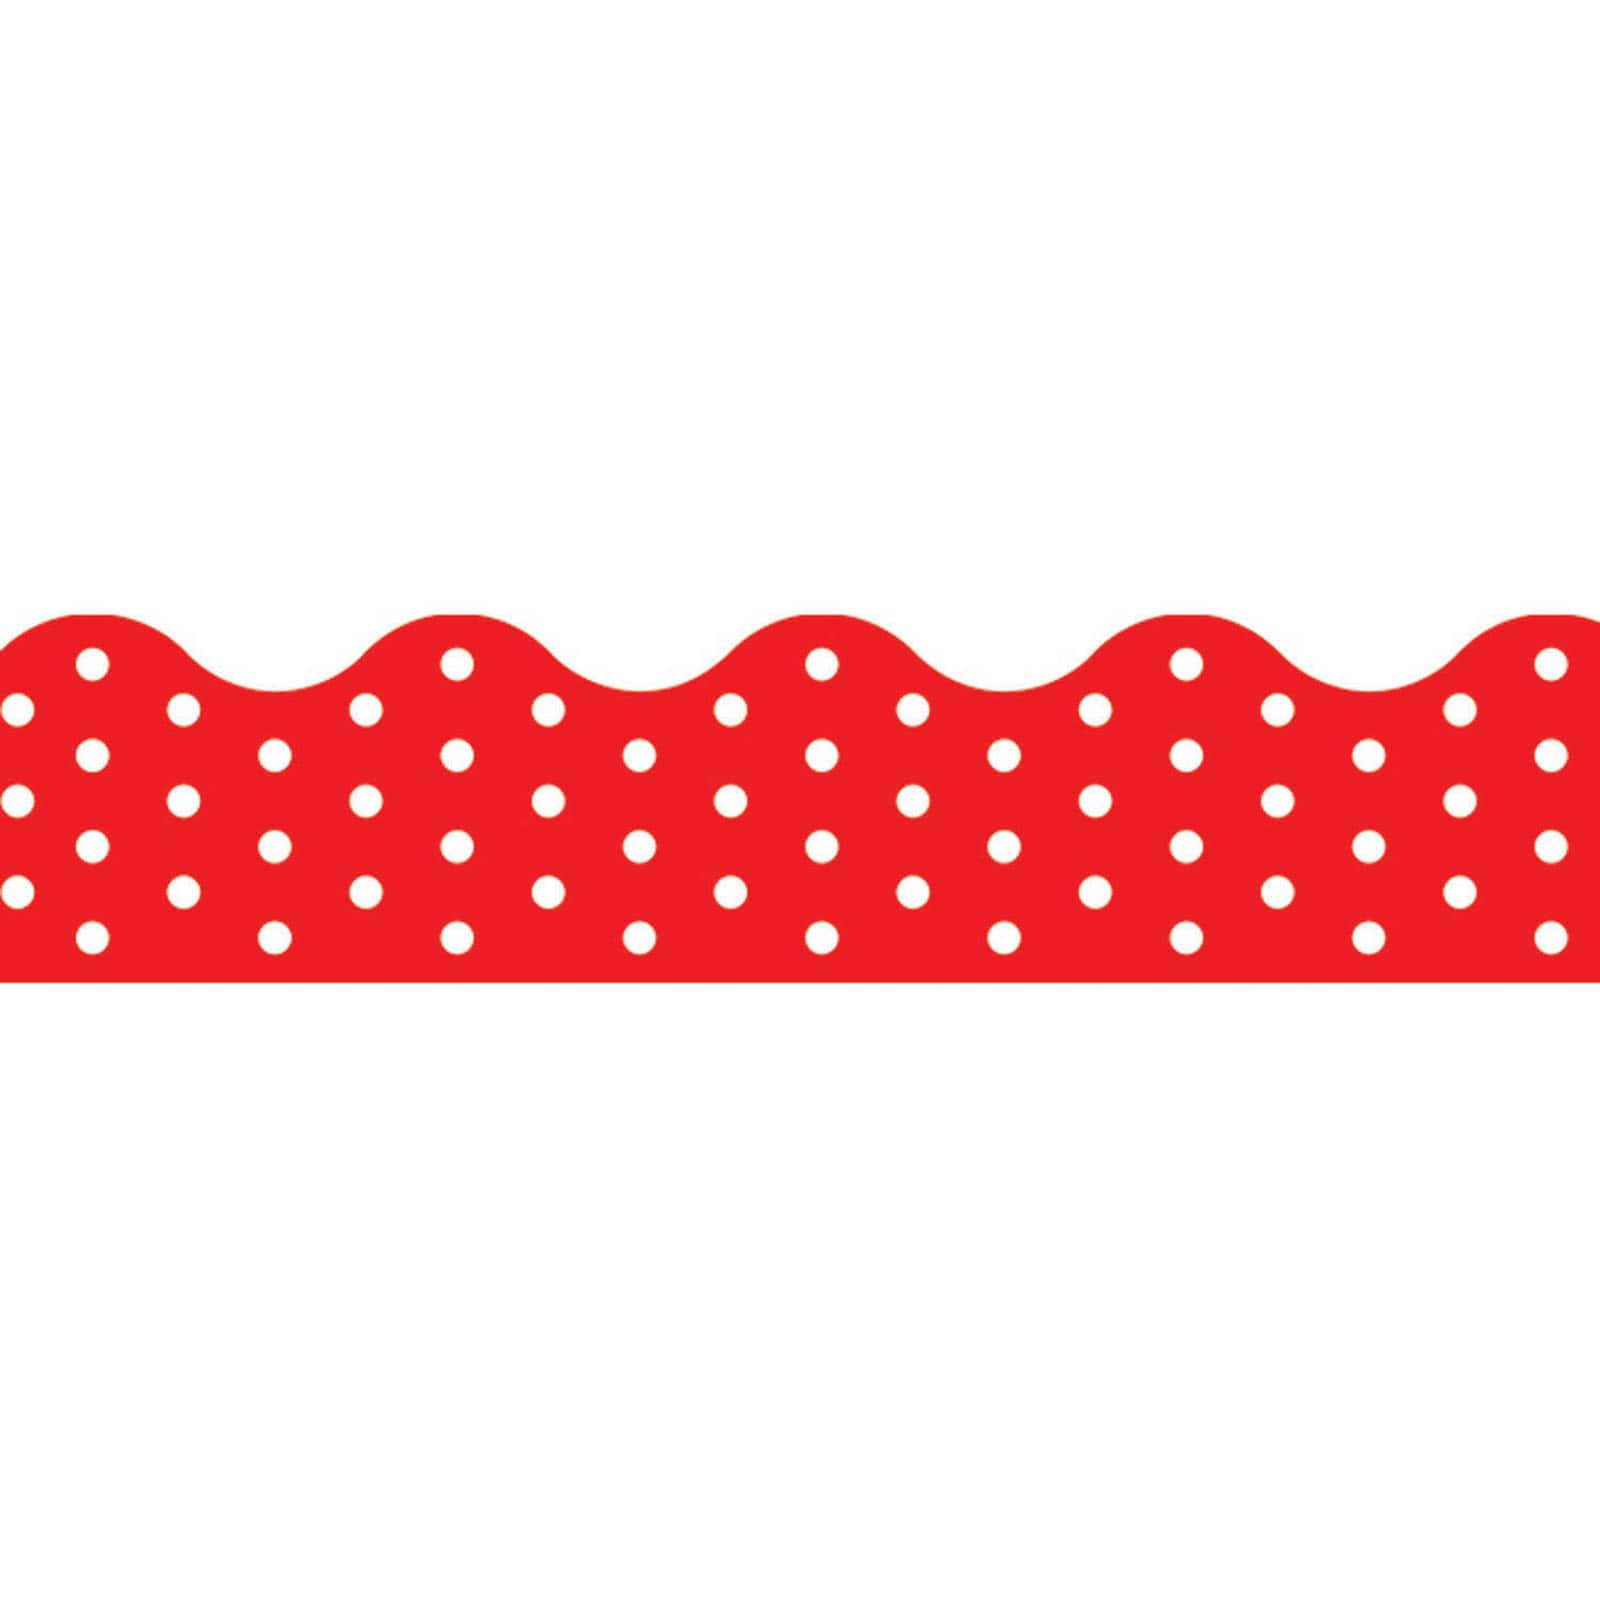 red and white polka dot border clip art